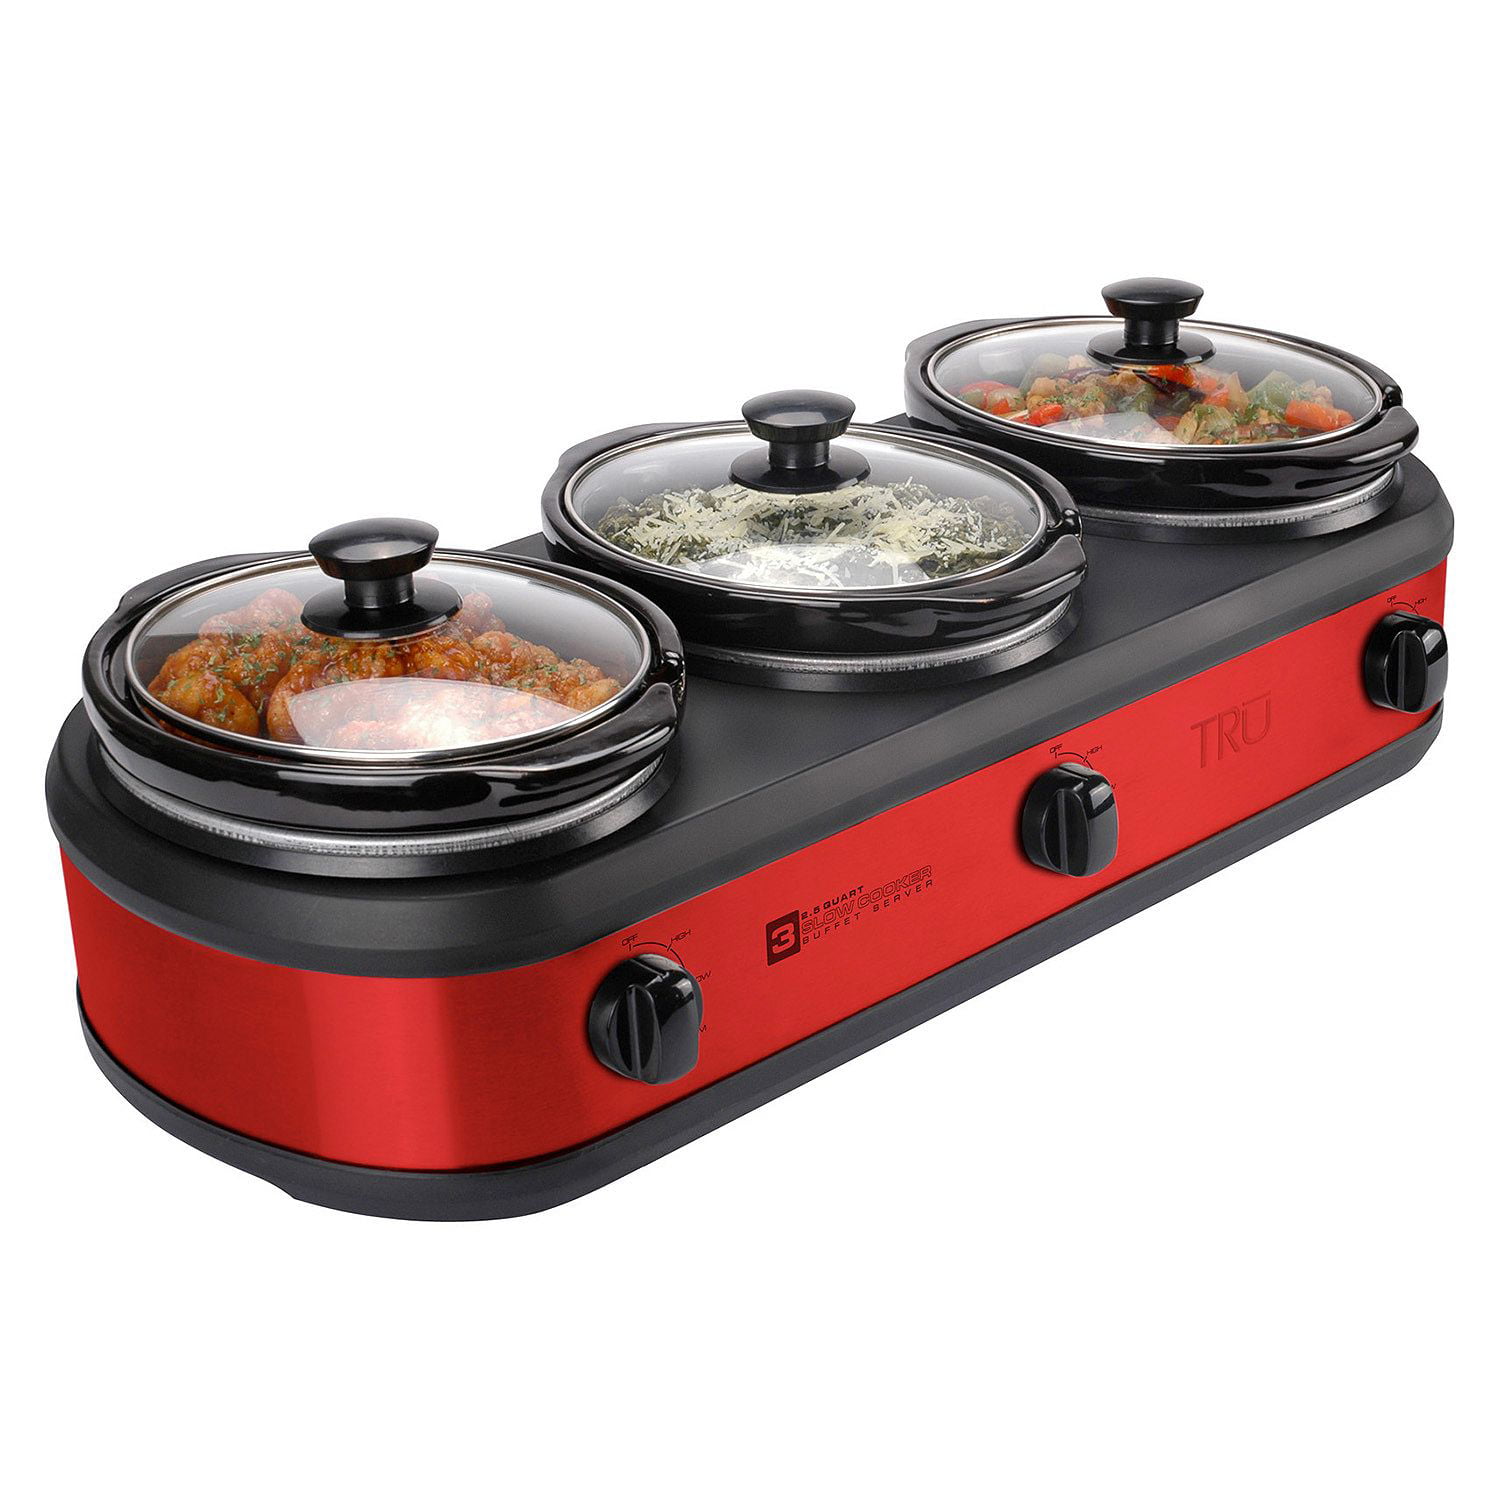 Red TRU Triple Slow Cooker Crock Pot Buffet Server Set 3 x 2.5 Qt Oval Inserts 